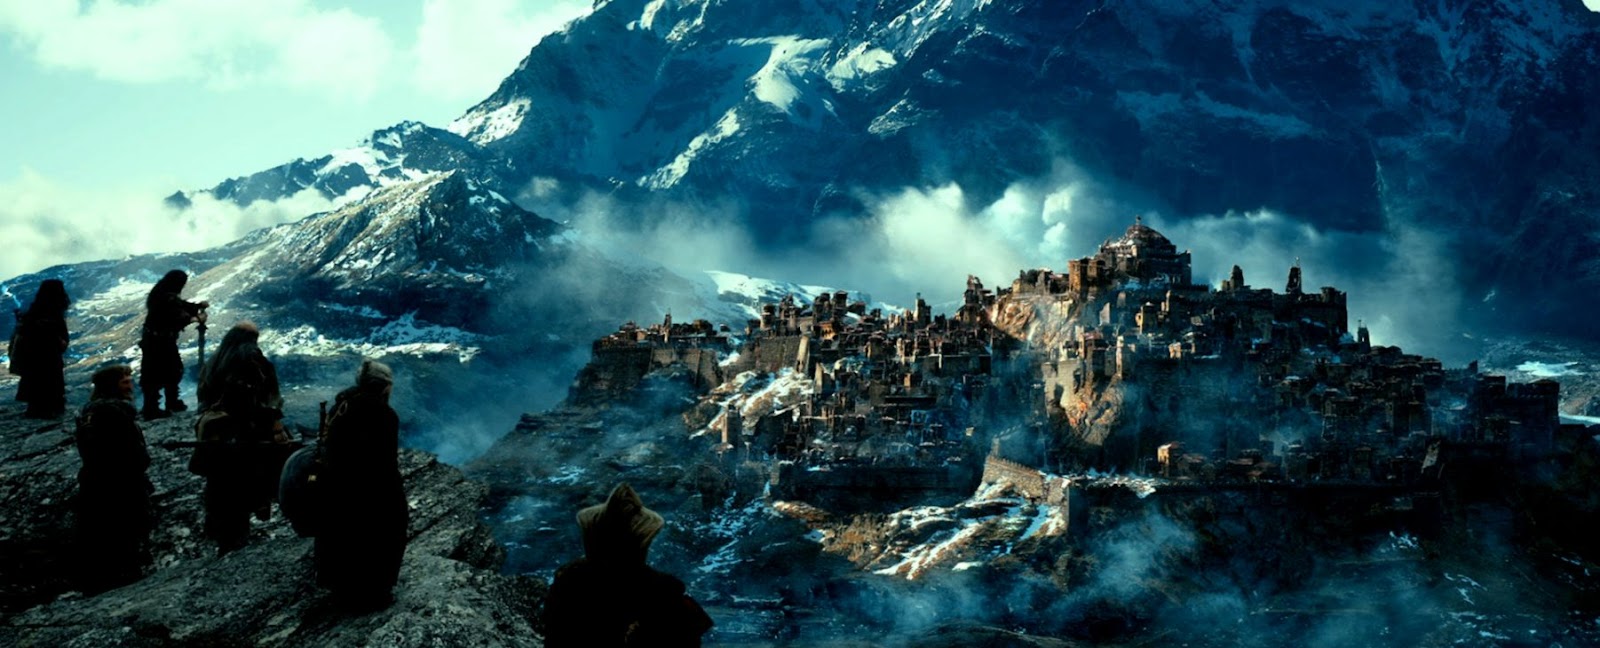 Hobbit The Desolation Of Smaug Stills Hd Wallpapers